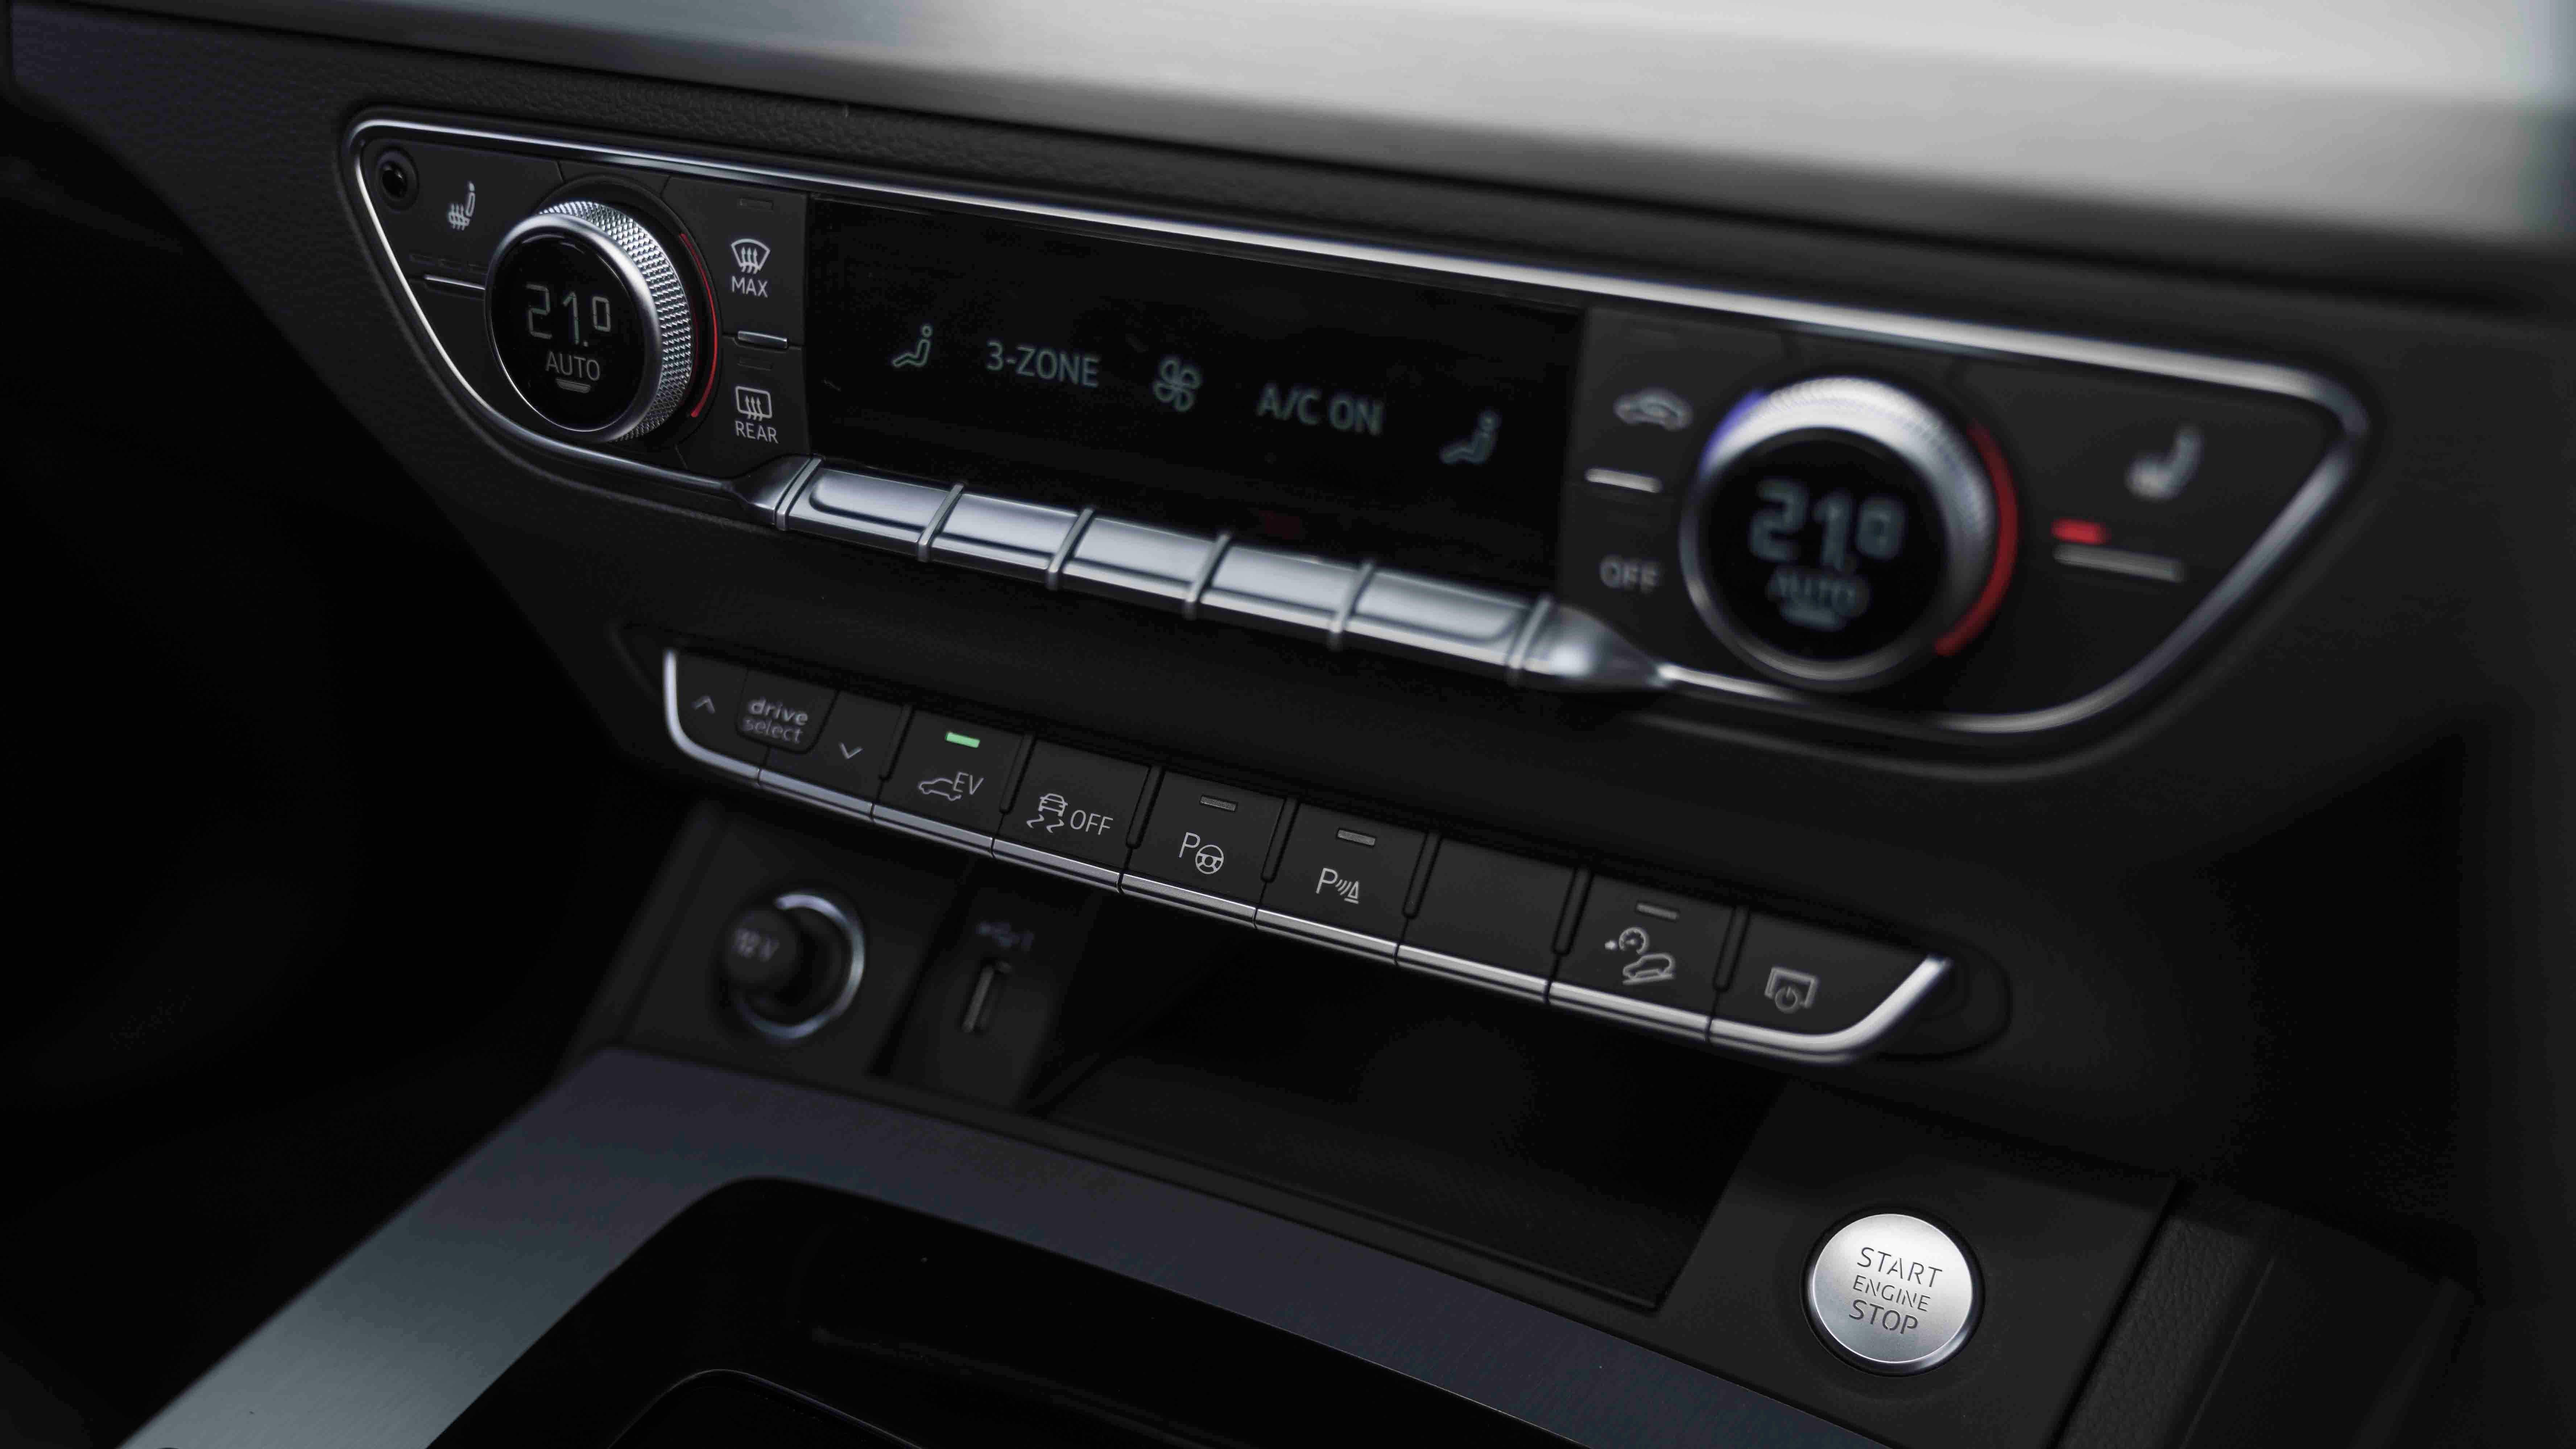 Audi Q5 climate controls